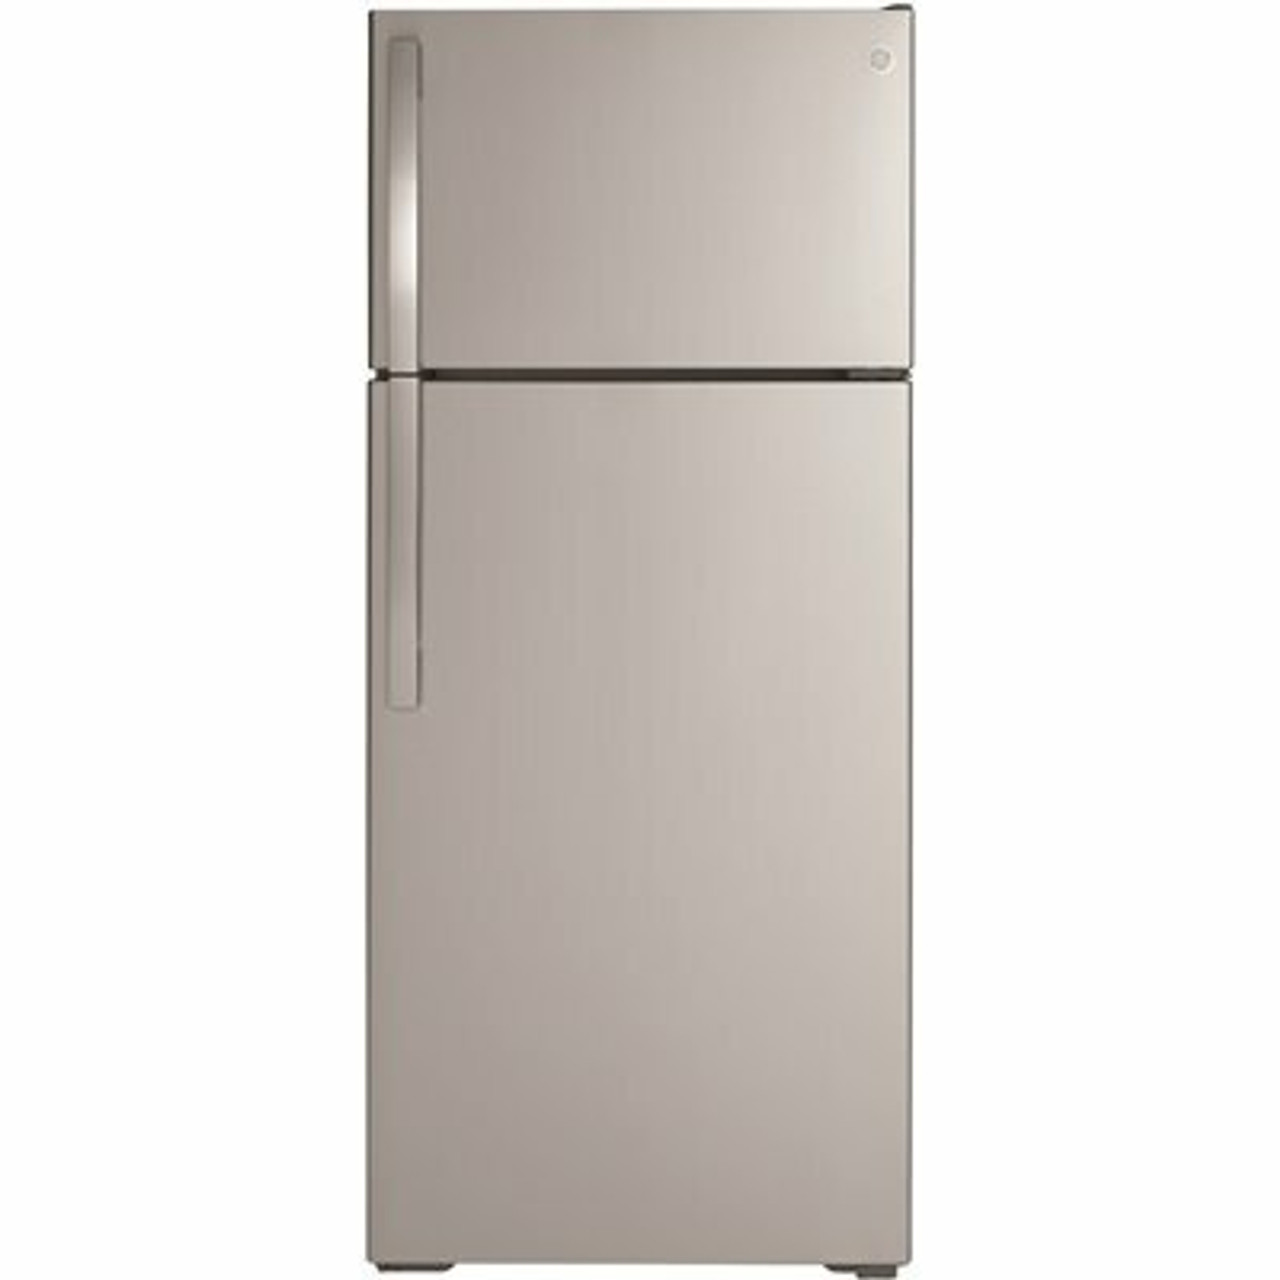 Ge 17.5 Cu. Ft. Top Freezer Refrigerator In Stainless Steel